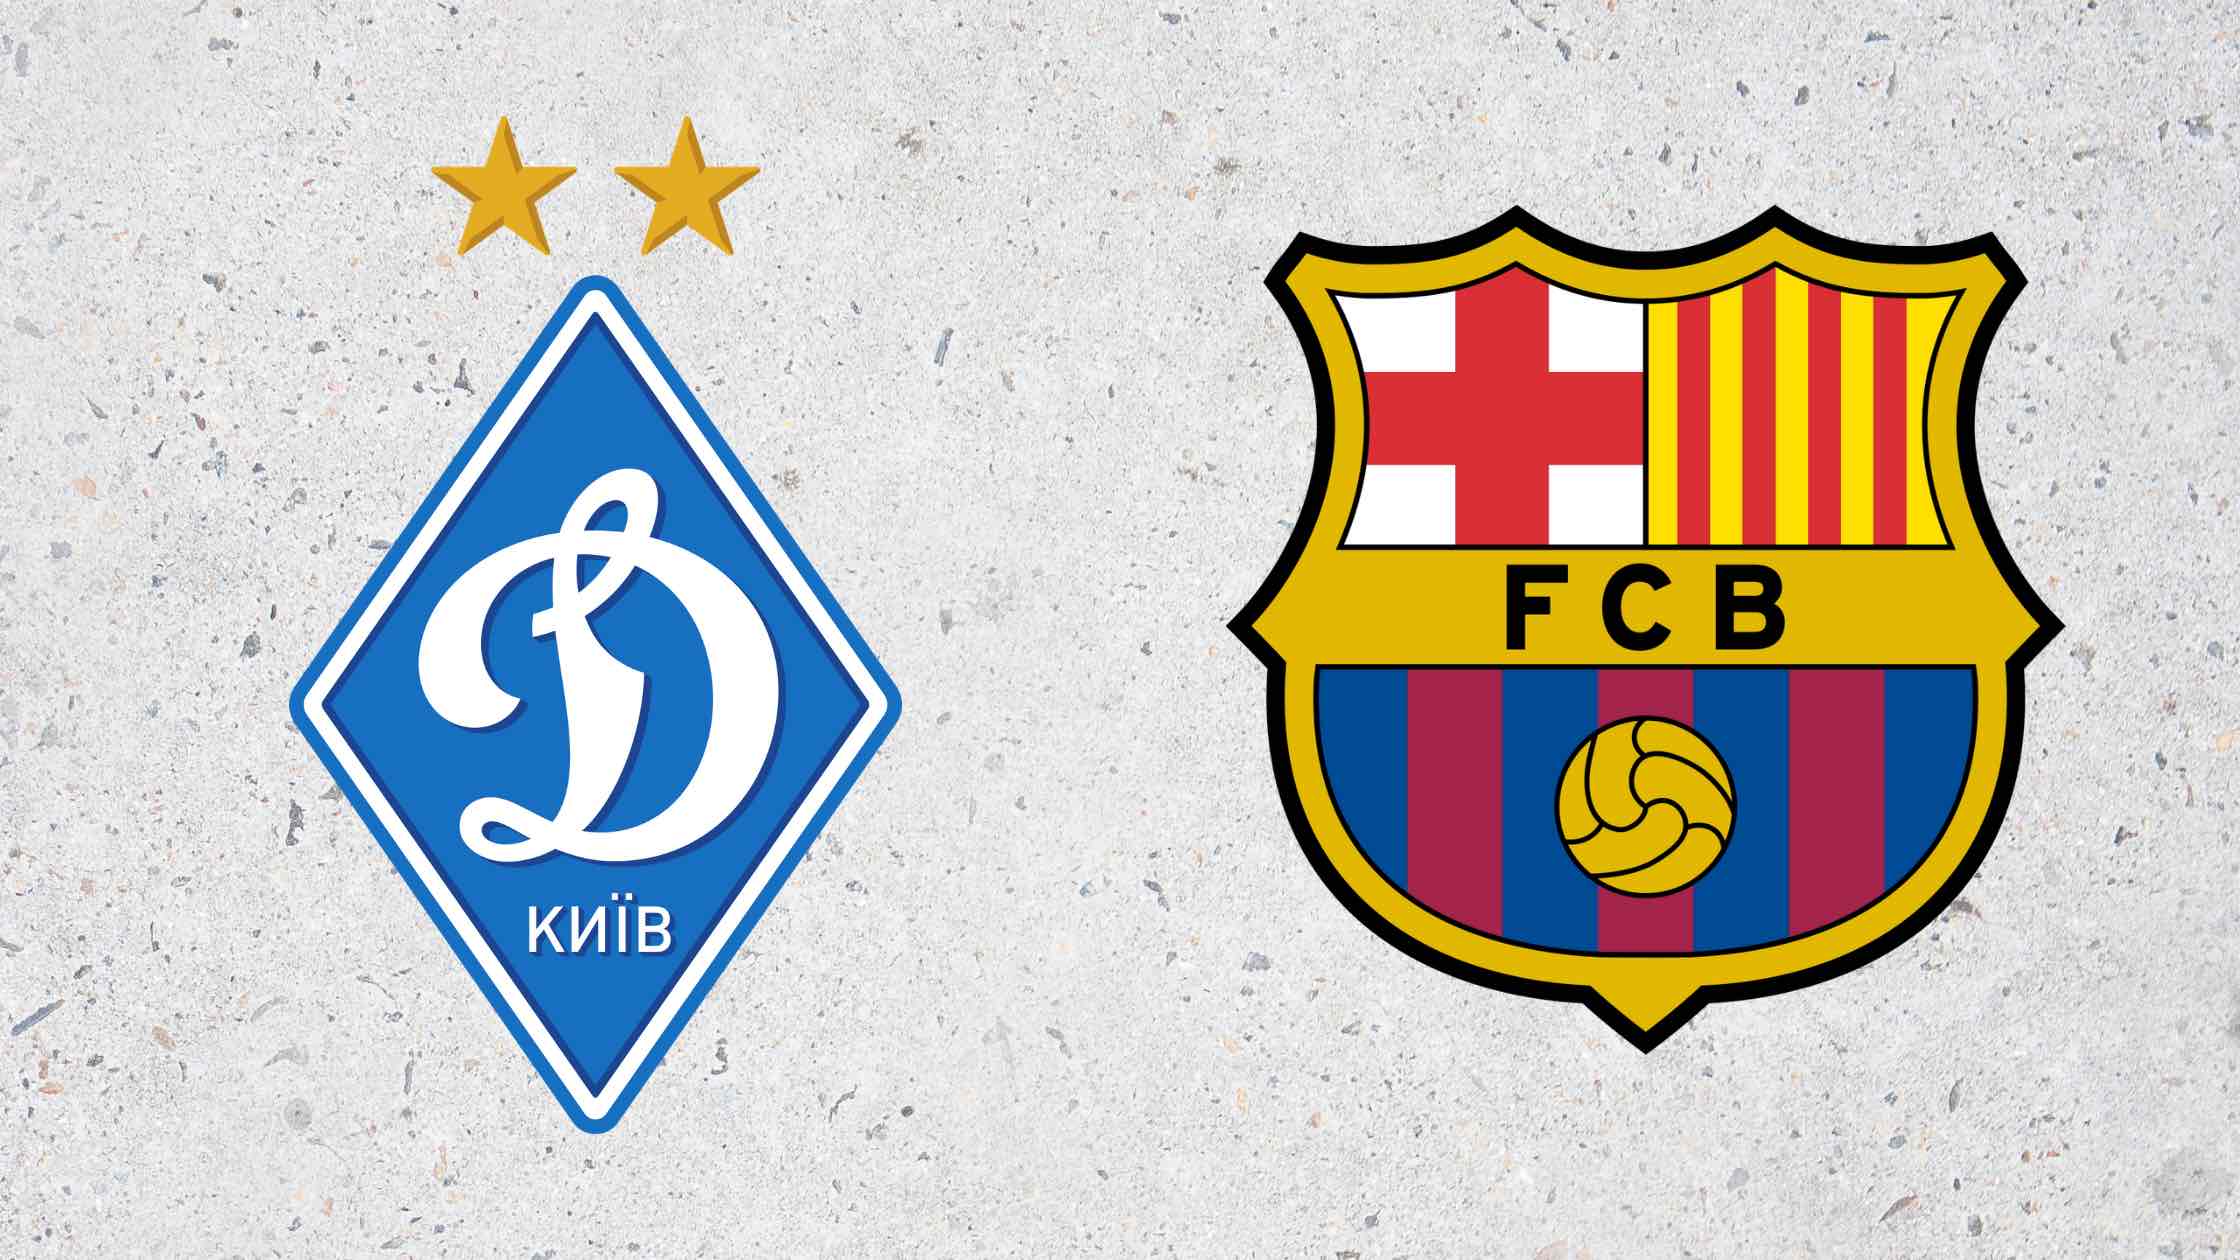 Dynamo Kiew und FC Barcelona treffen in der Champions-League-Gruppenphase 2020/21 aufeinander.